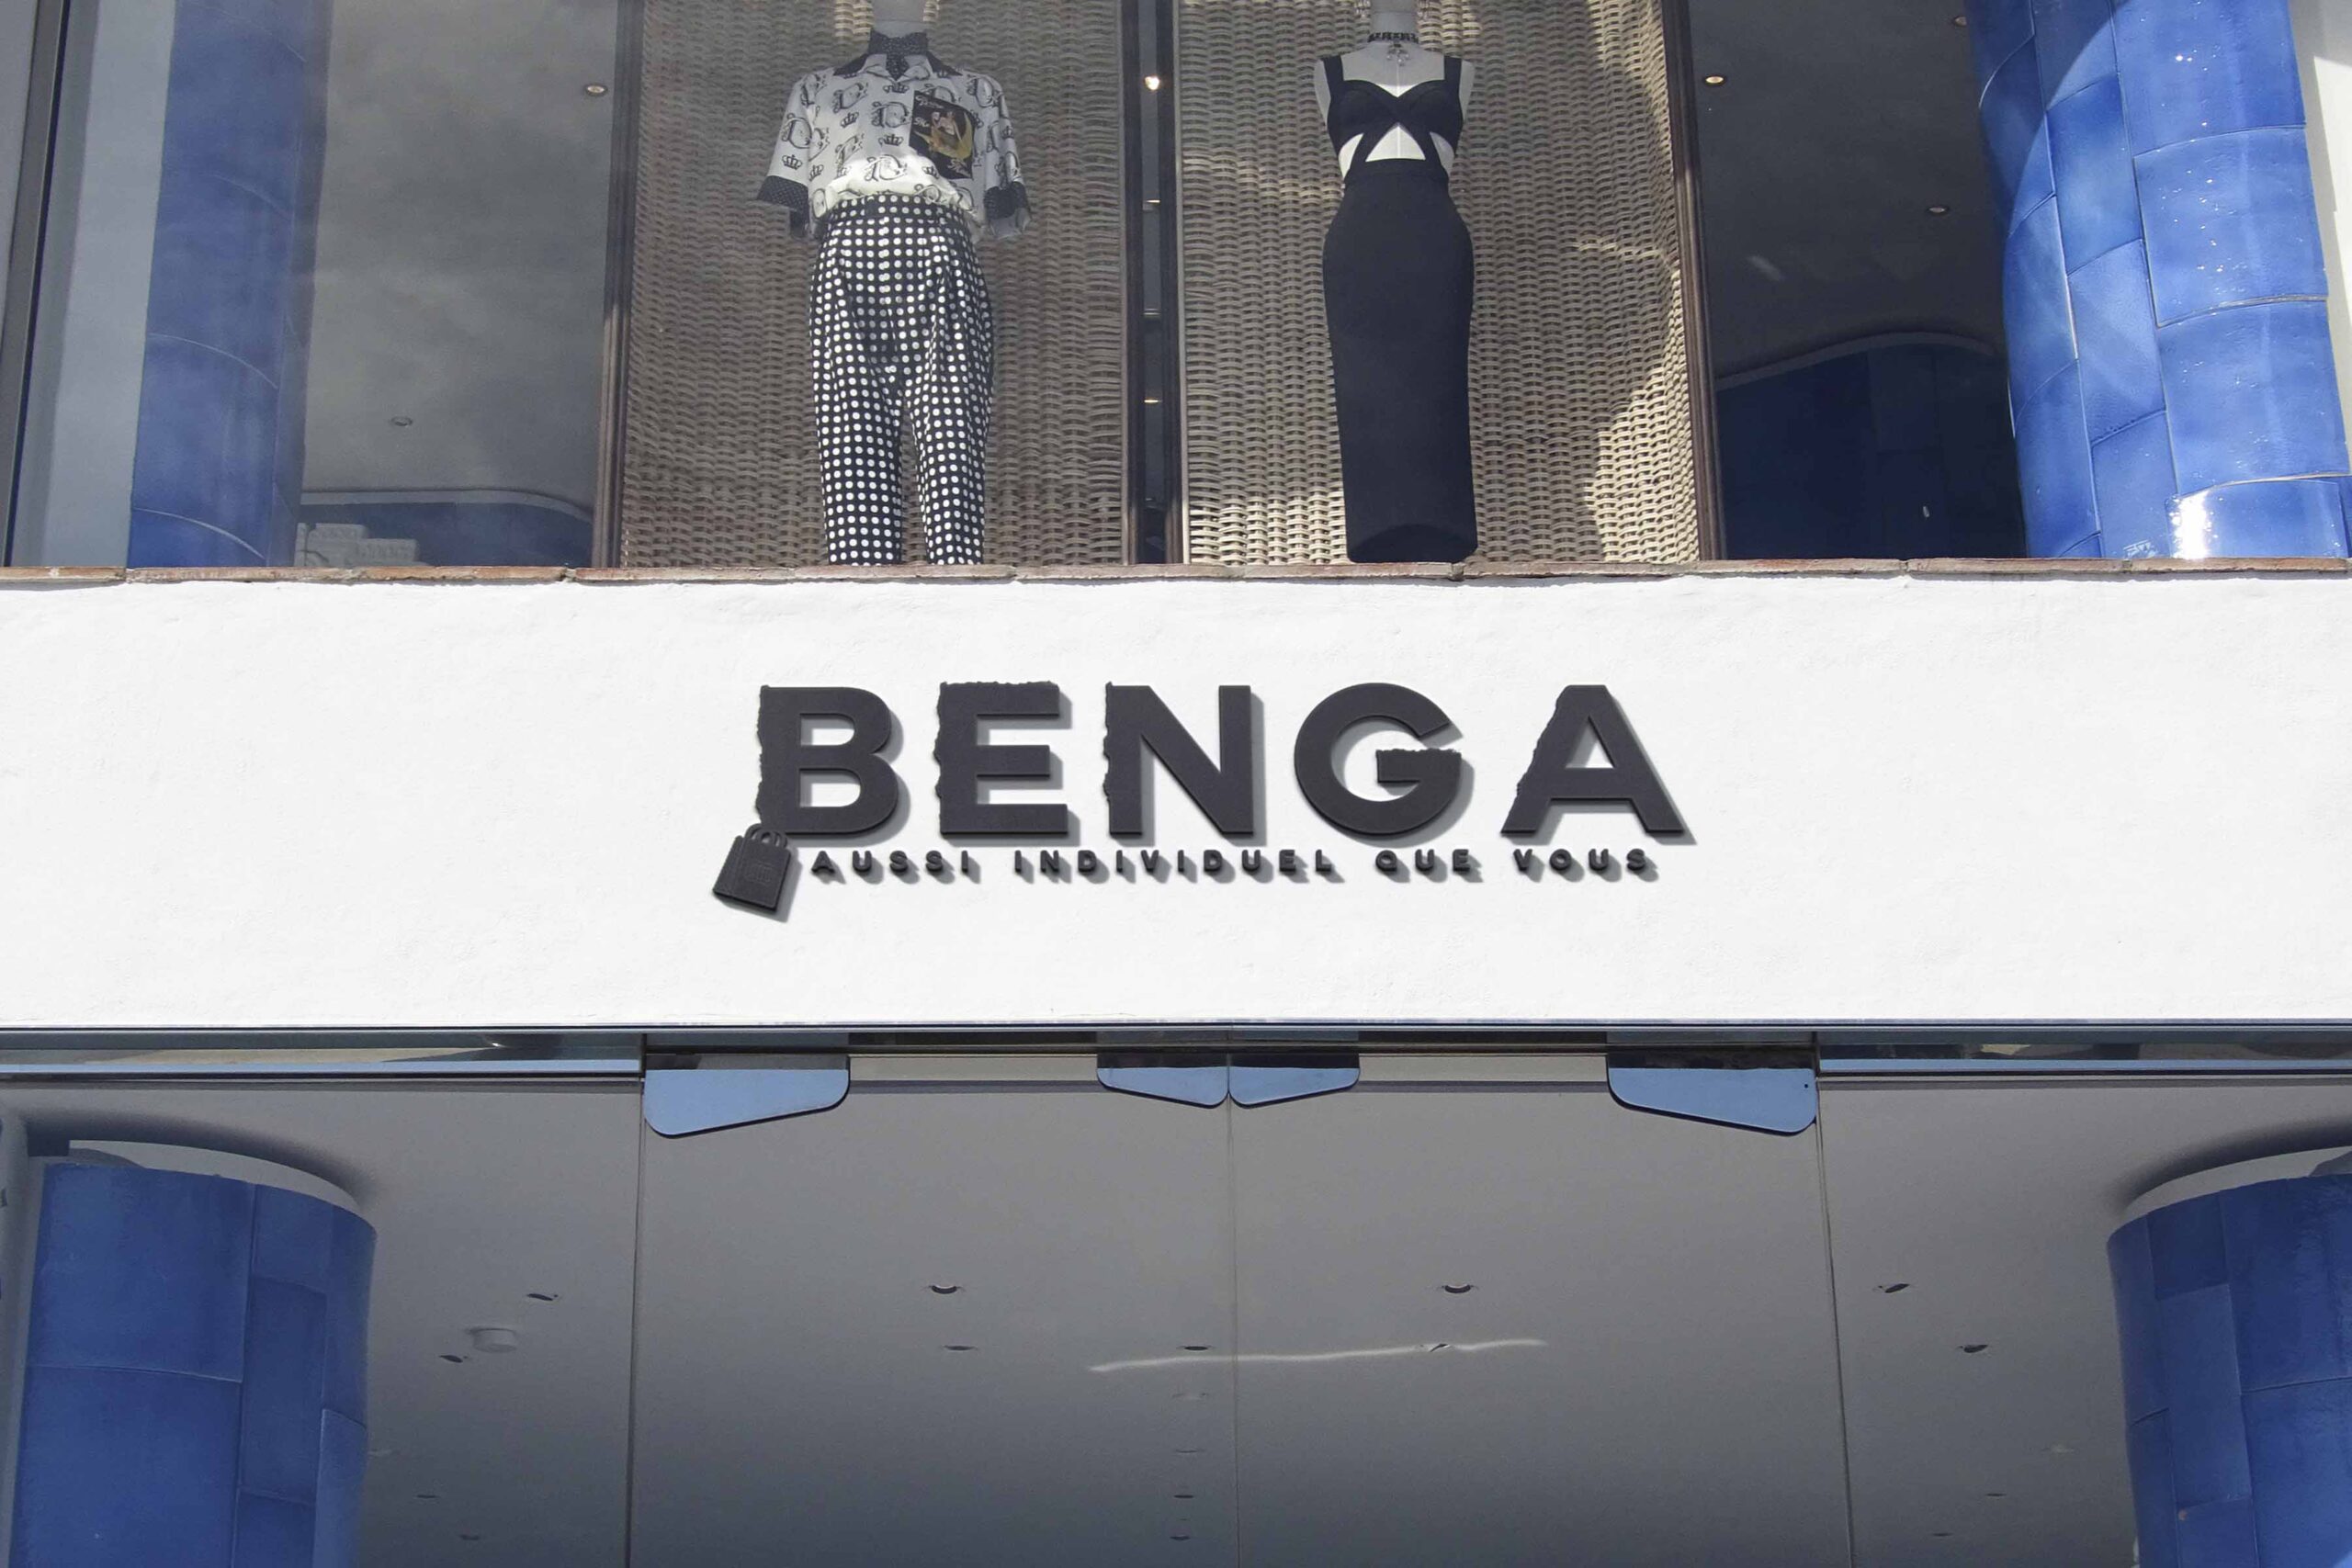 Benga shop in real life.